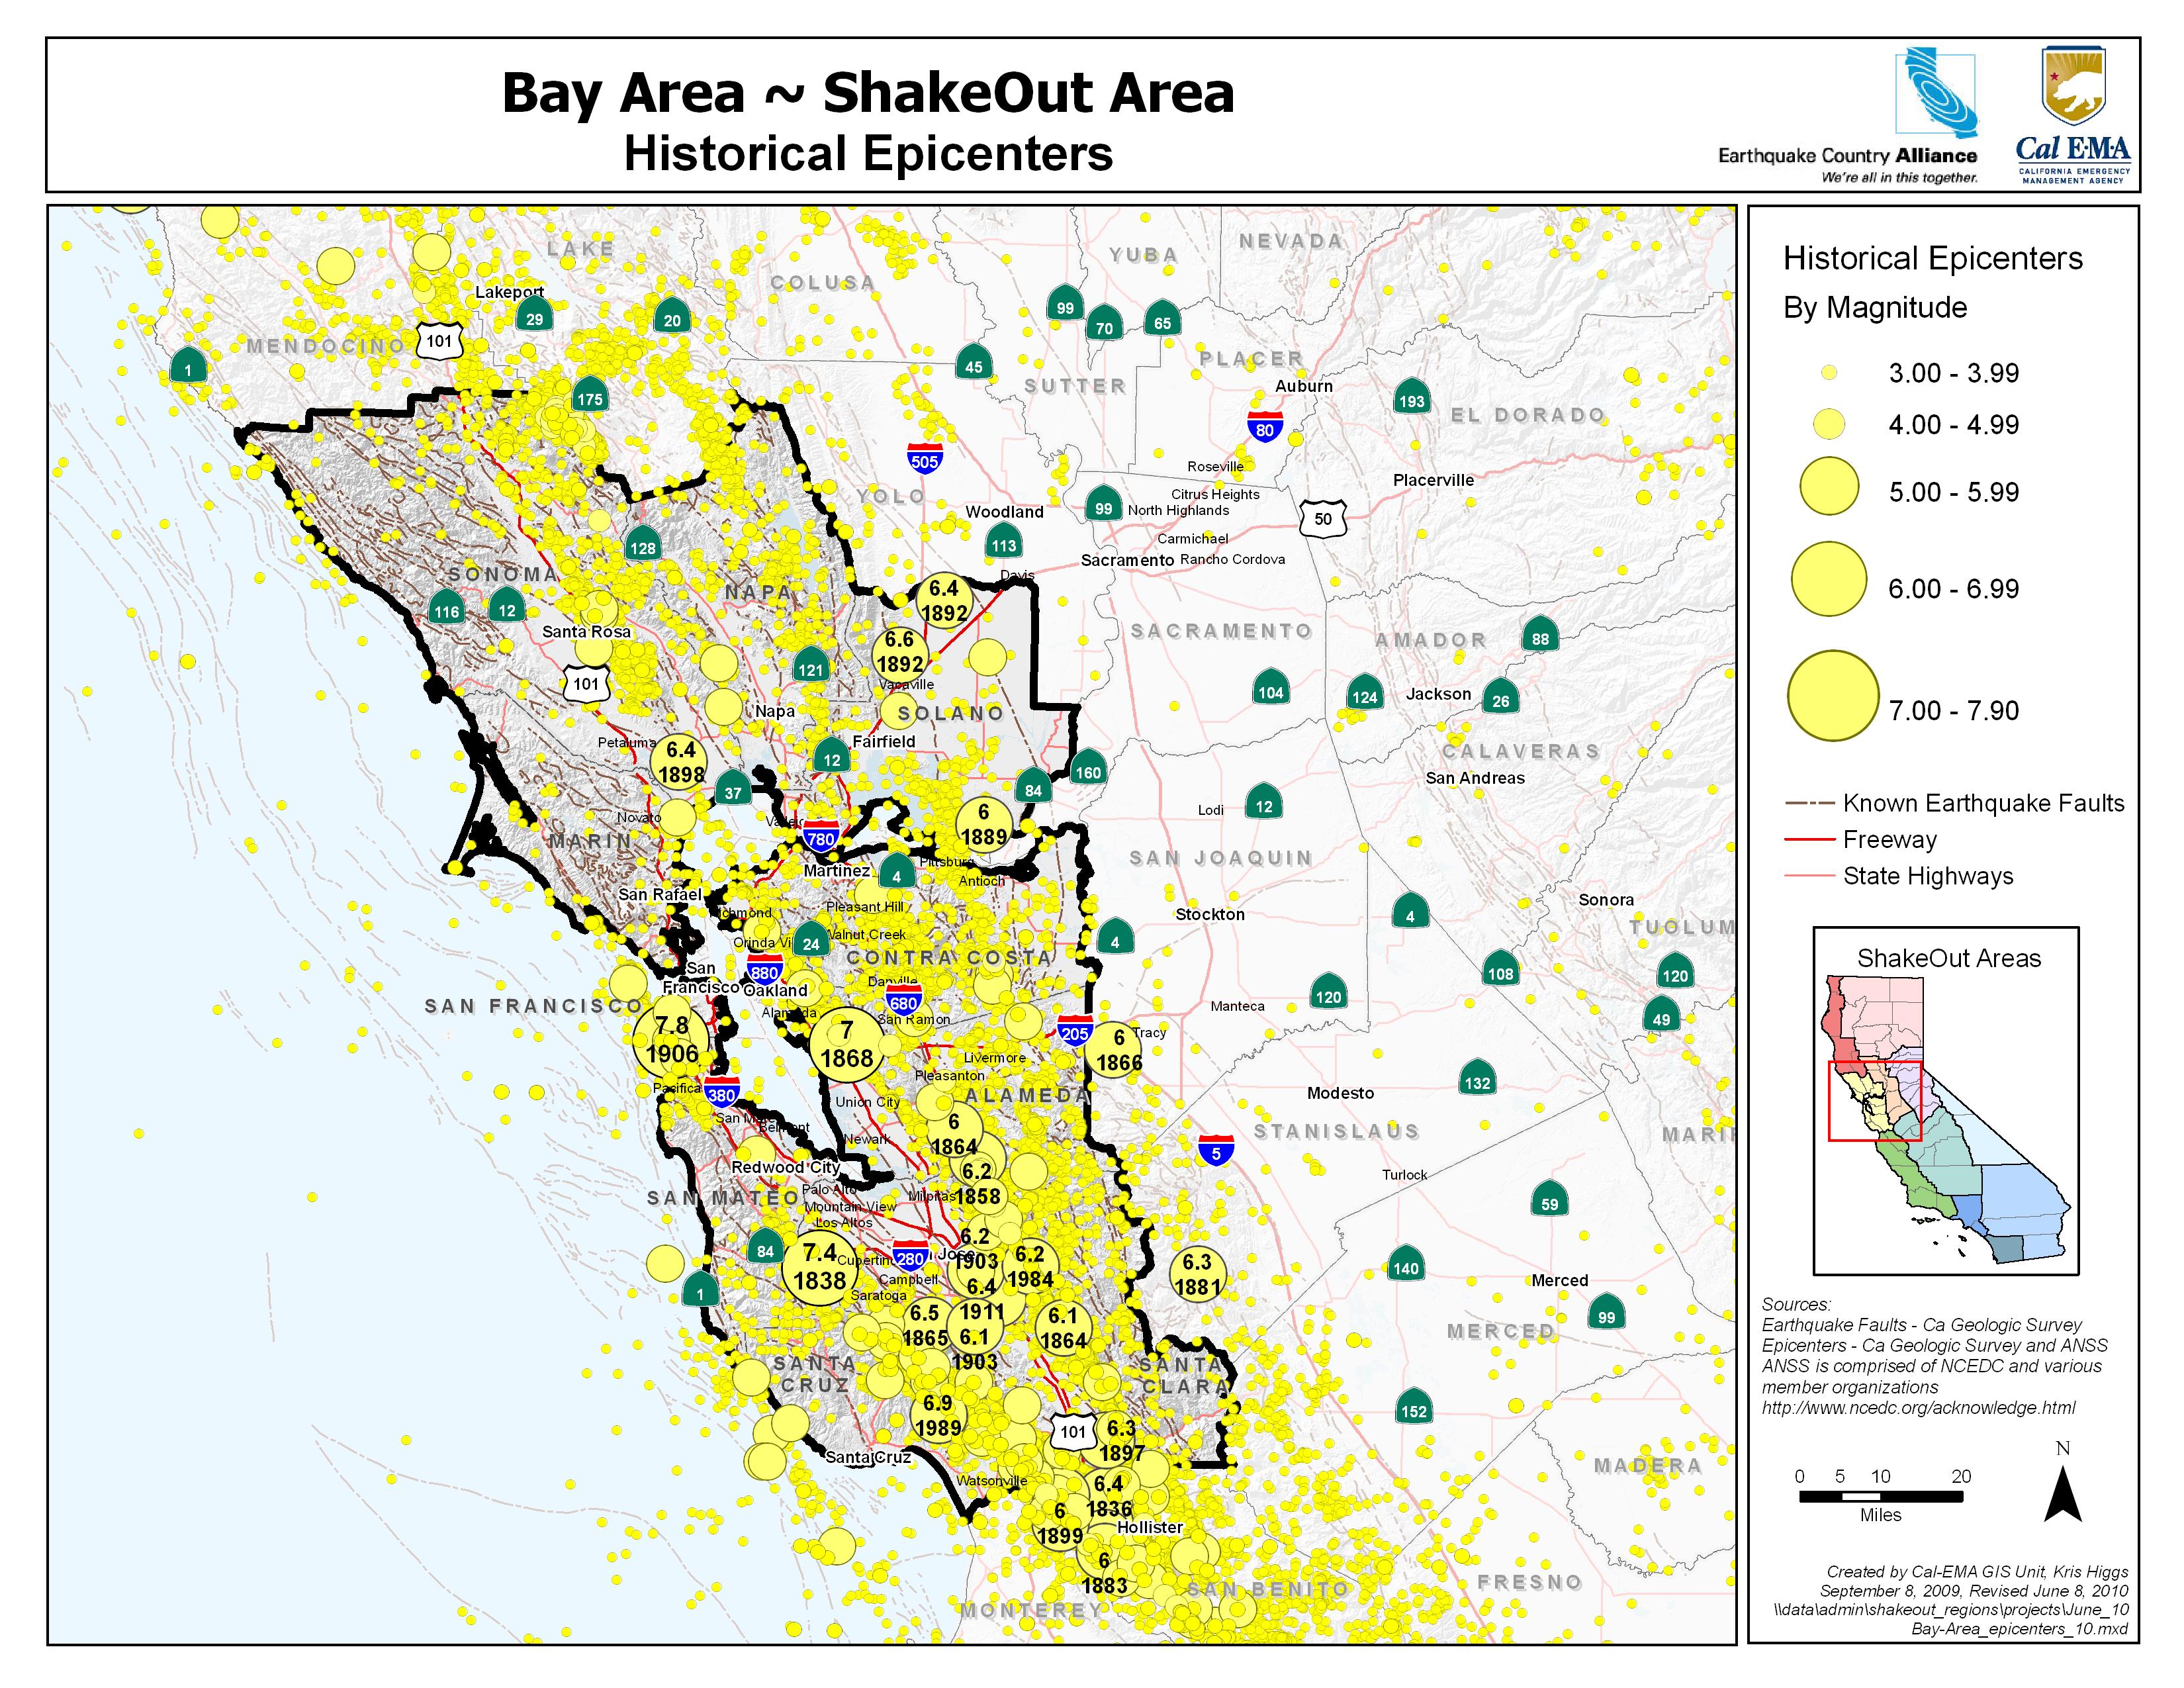 Earthquake Resources :: San Francisco Public Library3300 x 2550